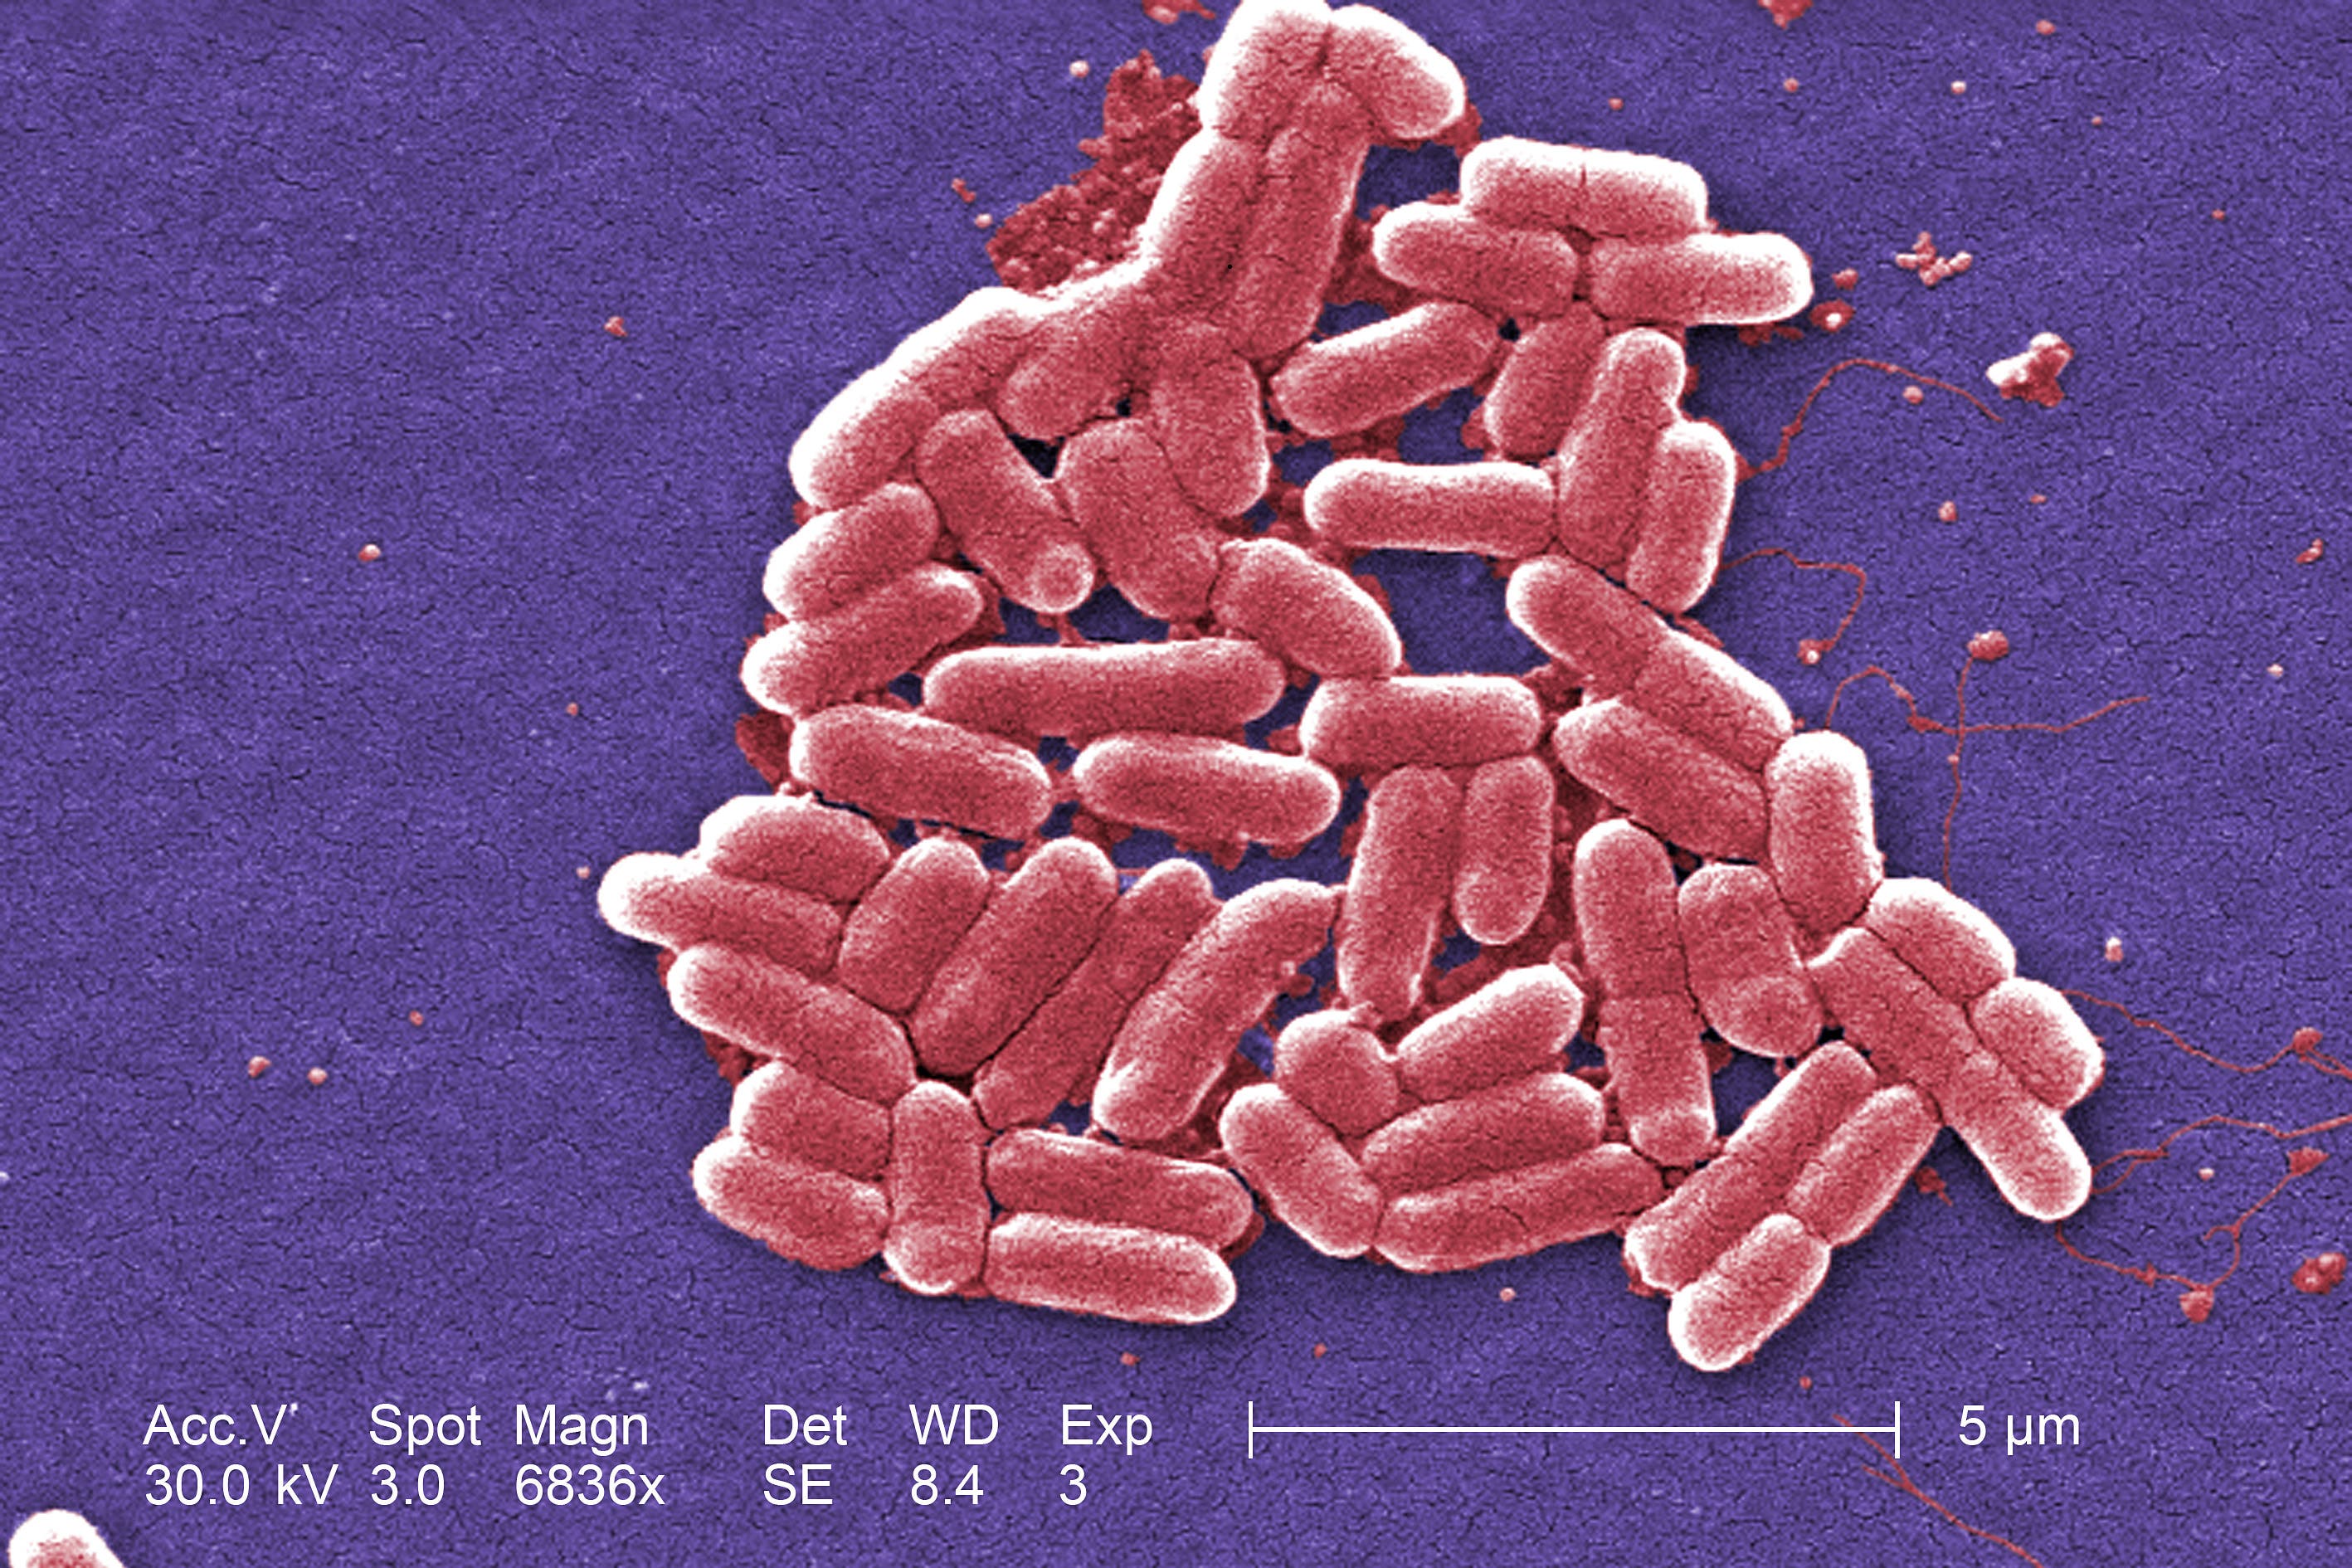 E.Coli bacteria (Centers for Disease Control and Prevention/PA)